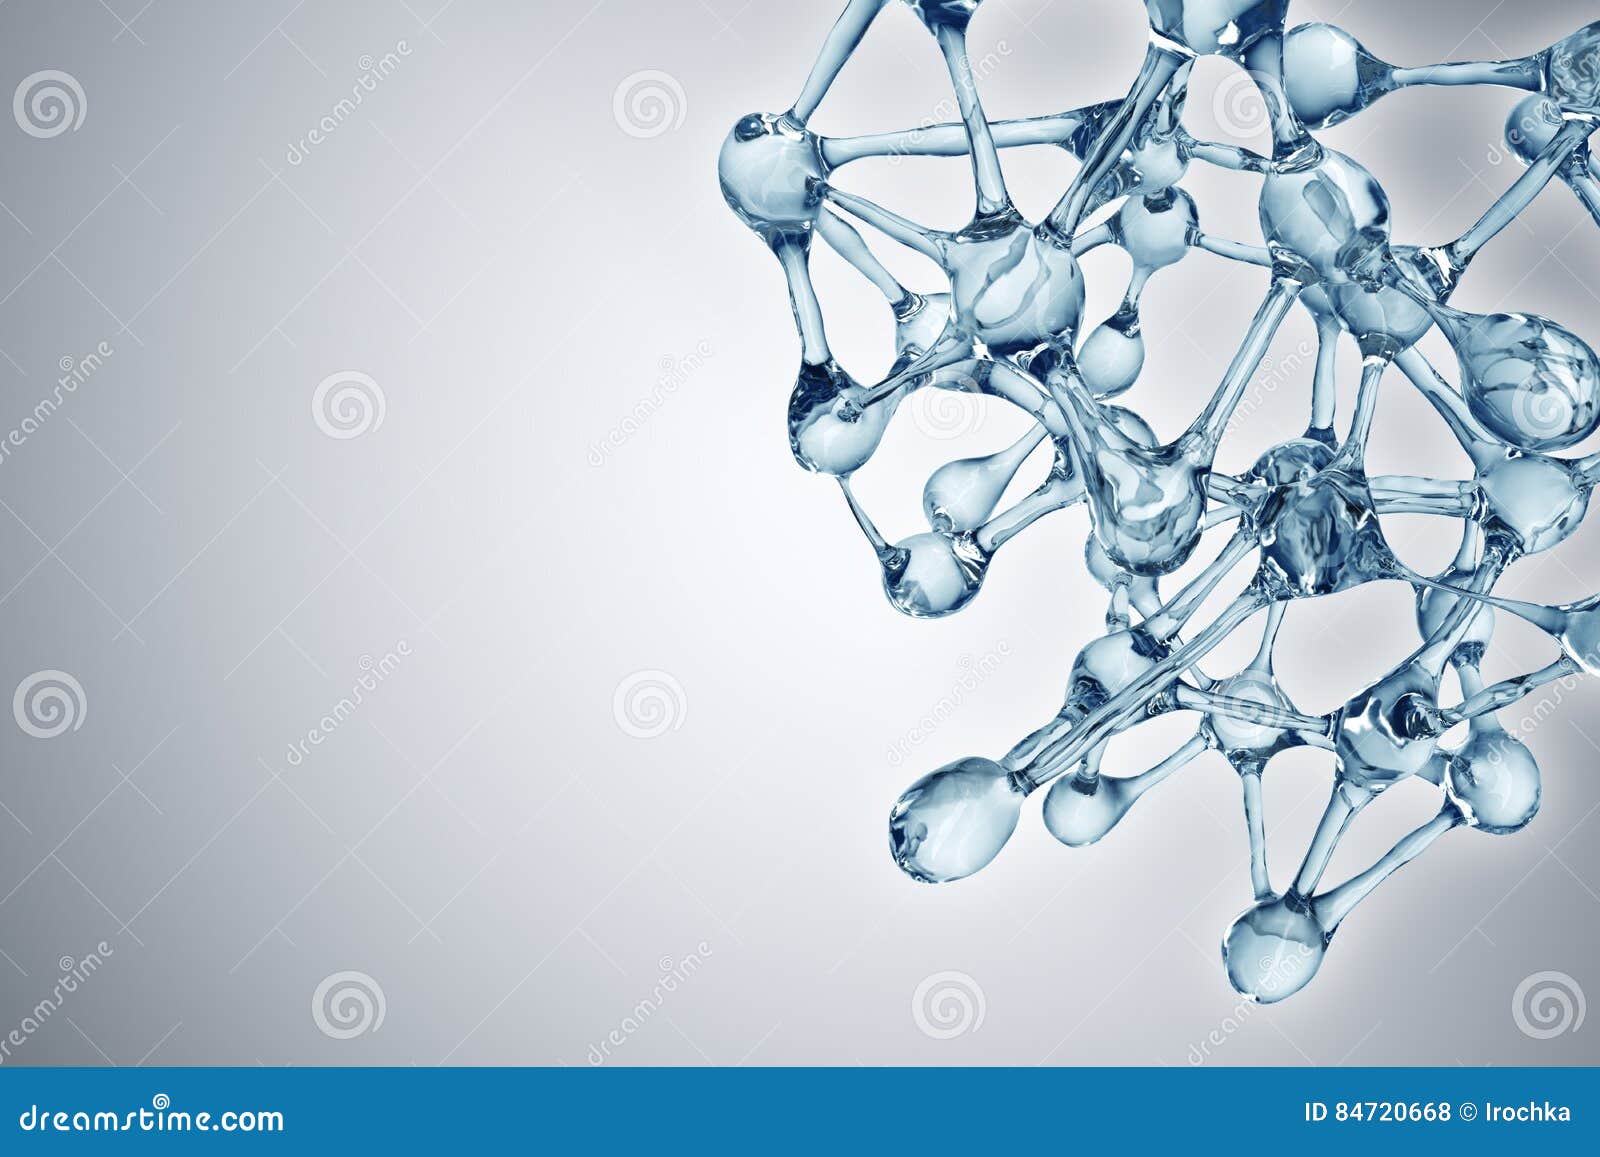 molecule  over blue background, life and biology, medicine scientific, molecular research dna.